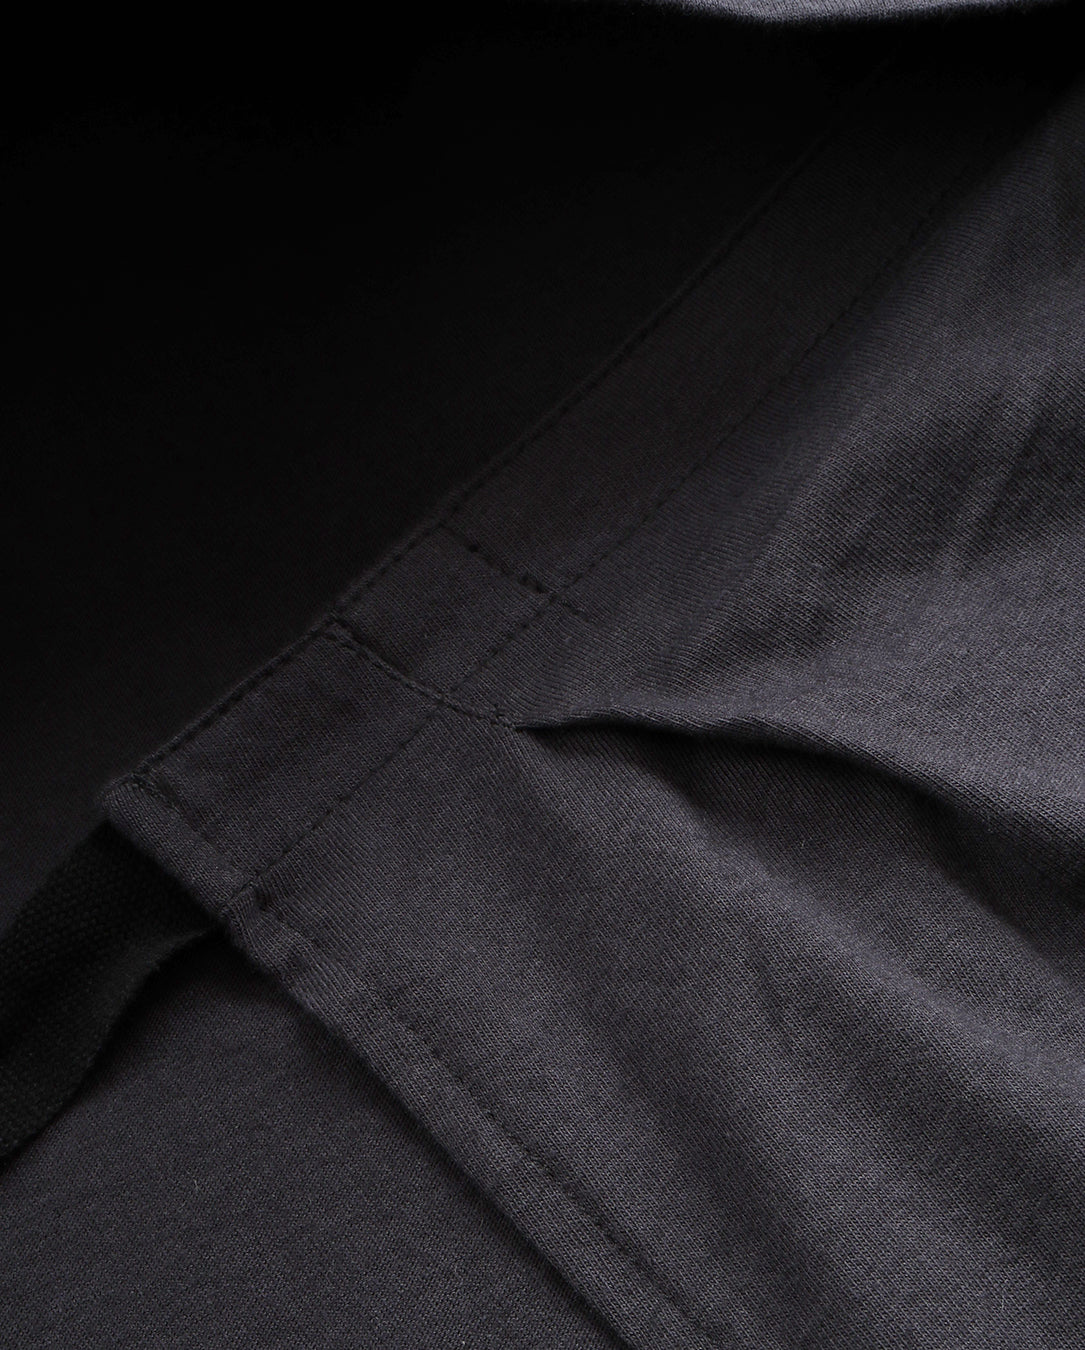 Cotton Jersey Cut-off Long T-shirt charcoal grey